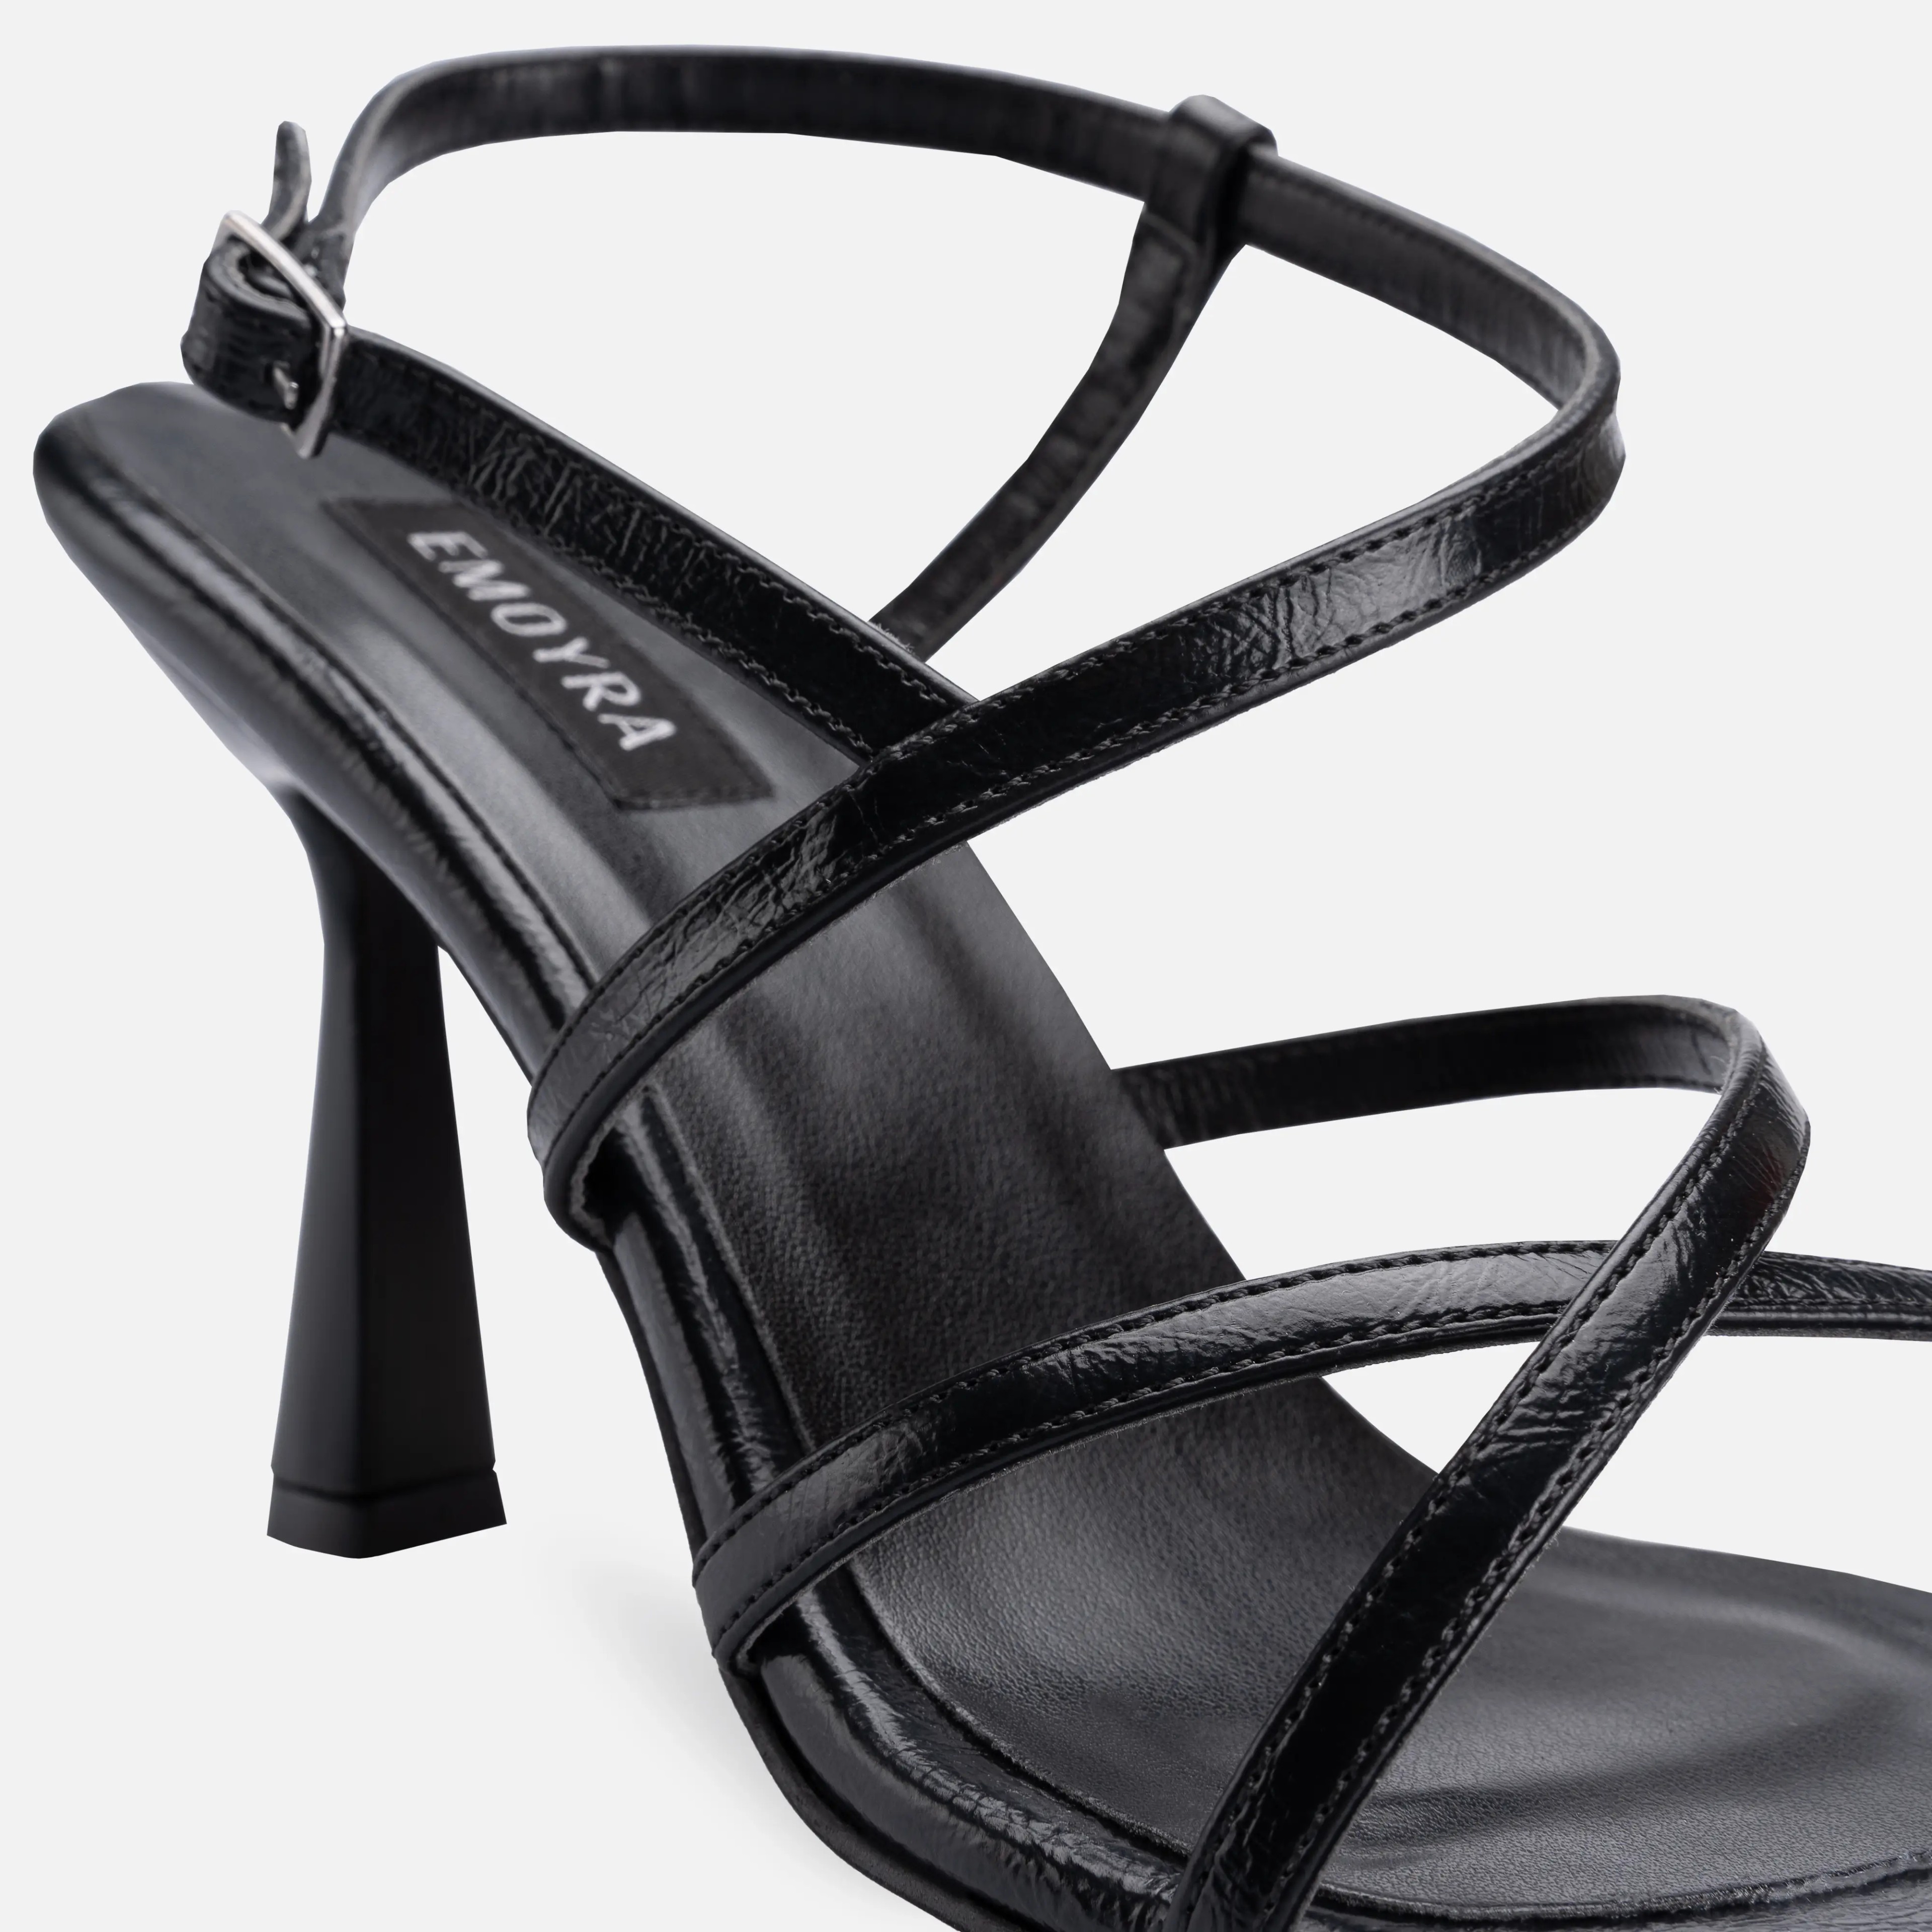 Metallic Thin High-Heeled Shoes - Black